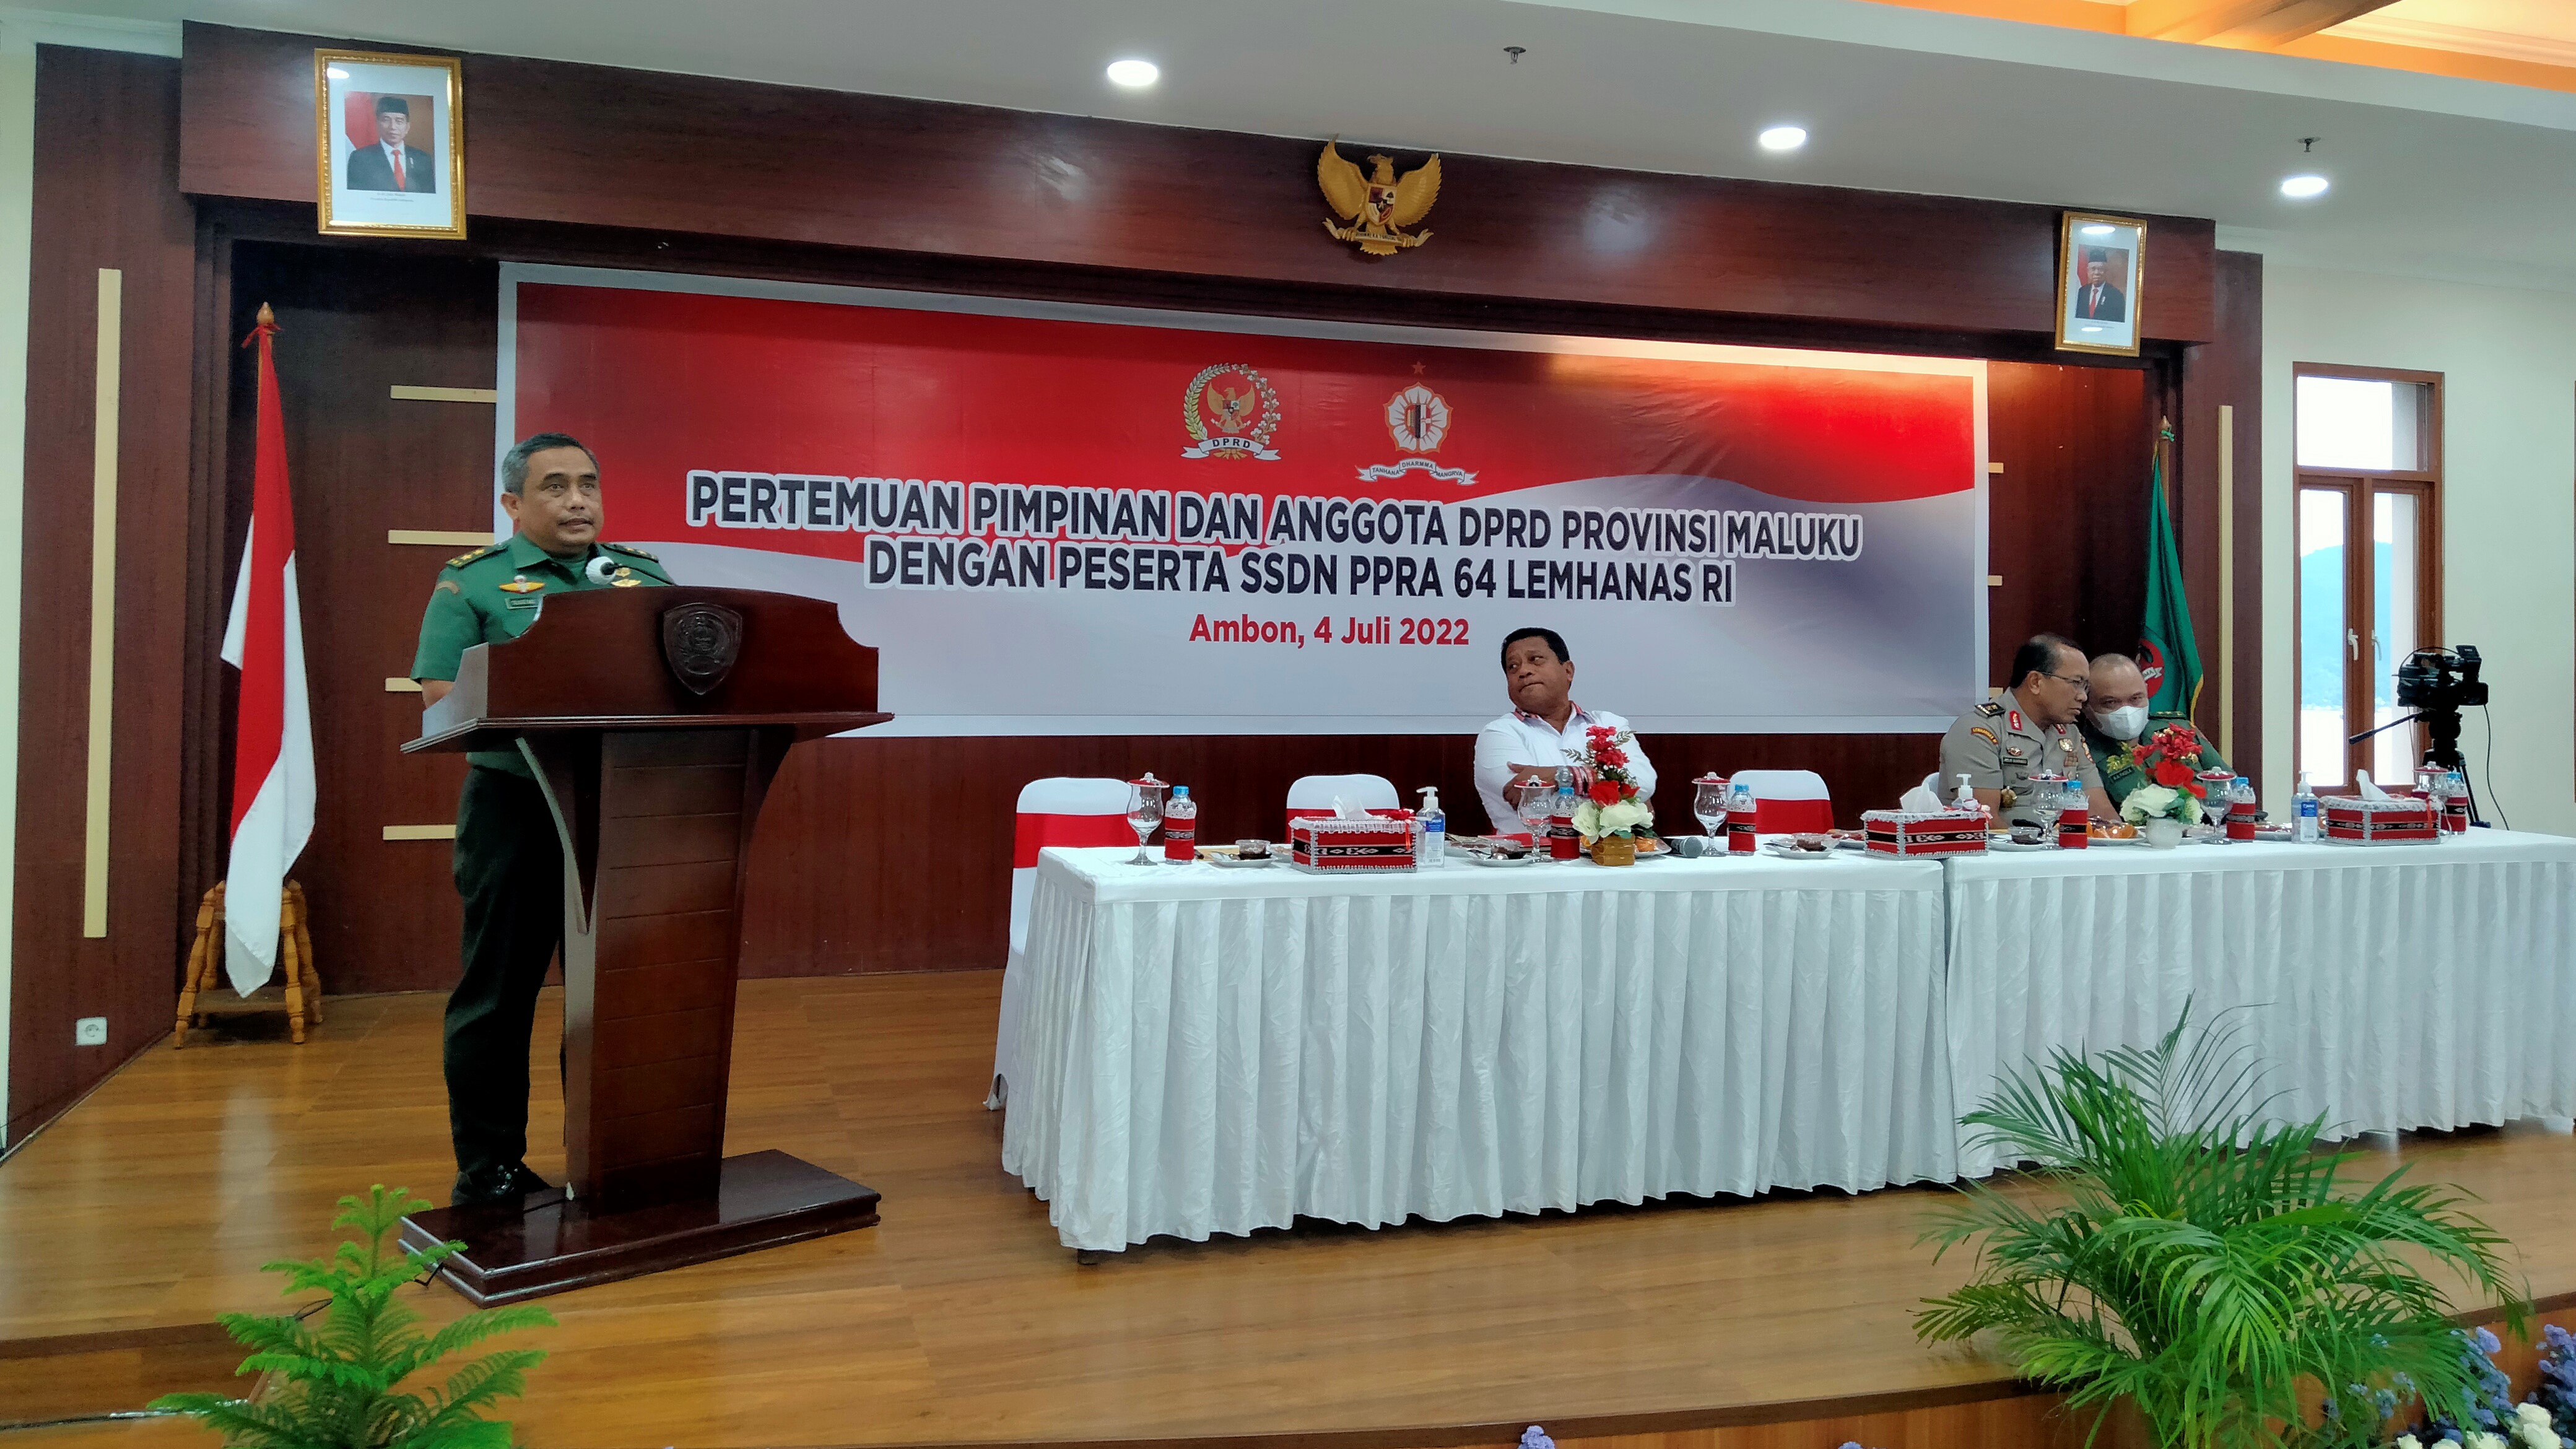 Provinsi Maluku Dipilih Menjadi Salah Satu Tujuan SSDN PPRA 64 Lemhannas RI